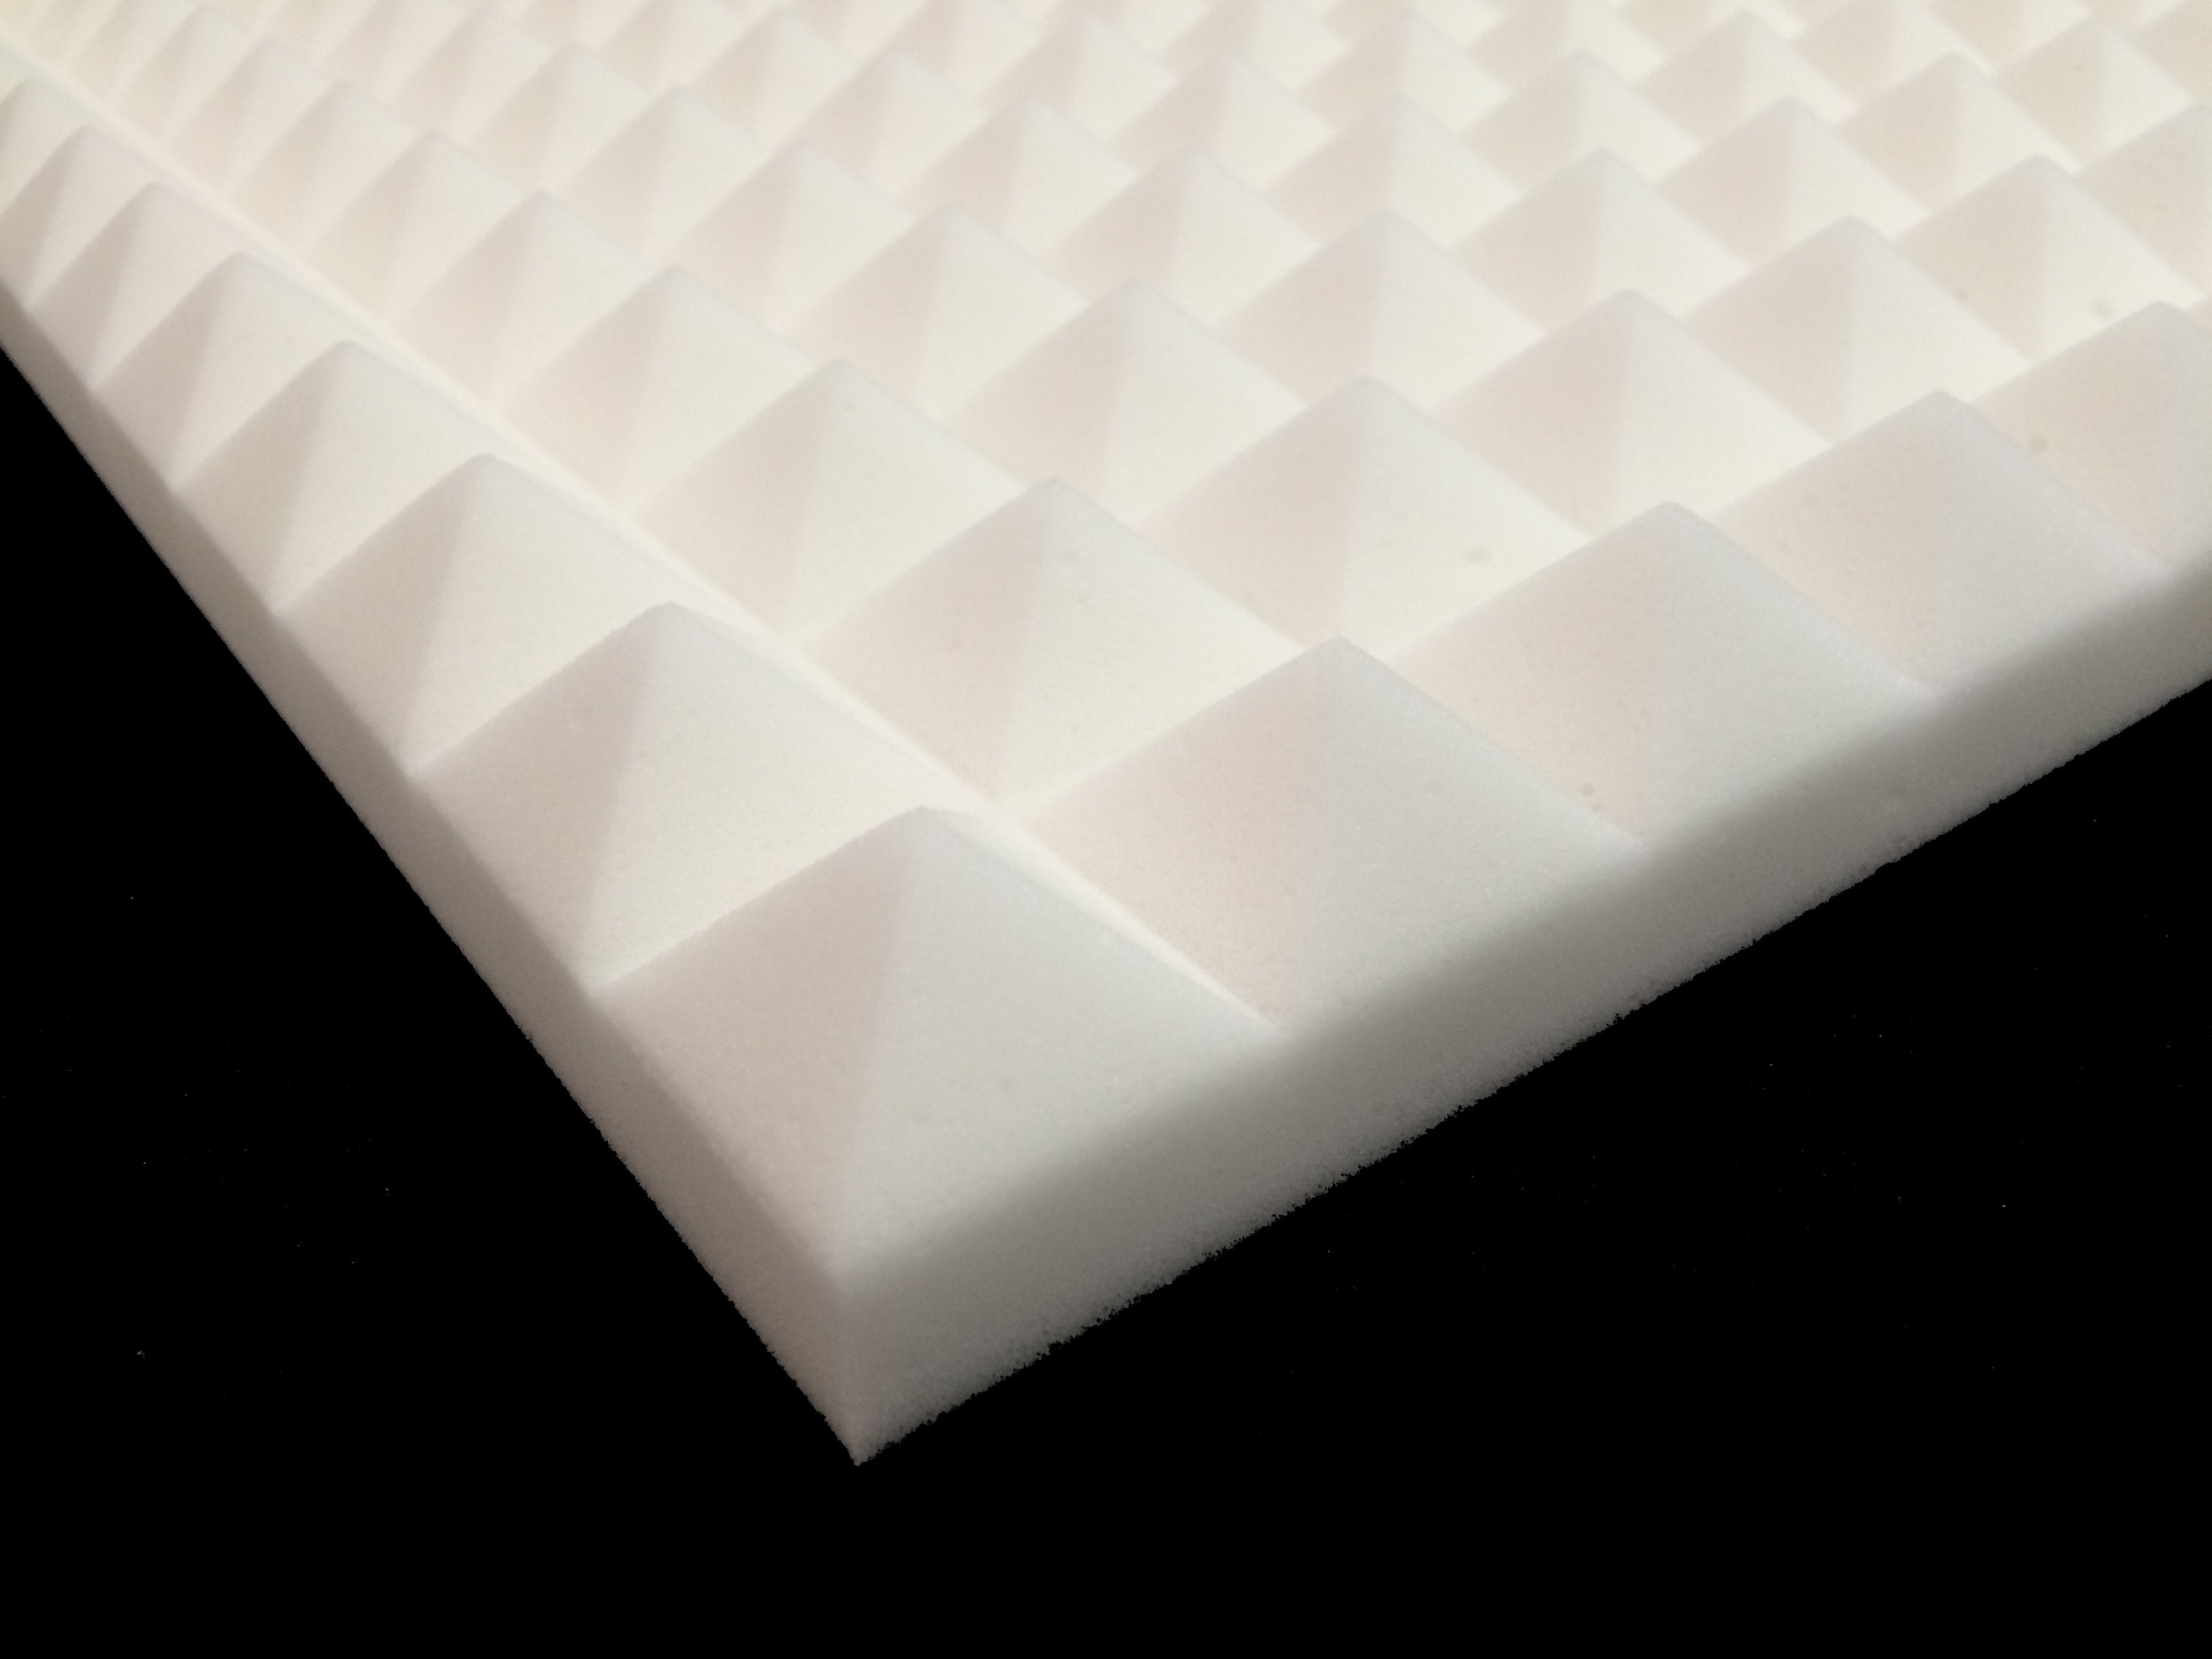 Mel-Acoustic Pyramid 40mm White Melamine Acoustic Foam Panel 600x600 - Advanced Acoustics